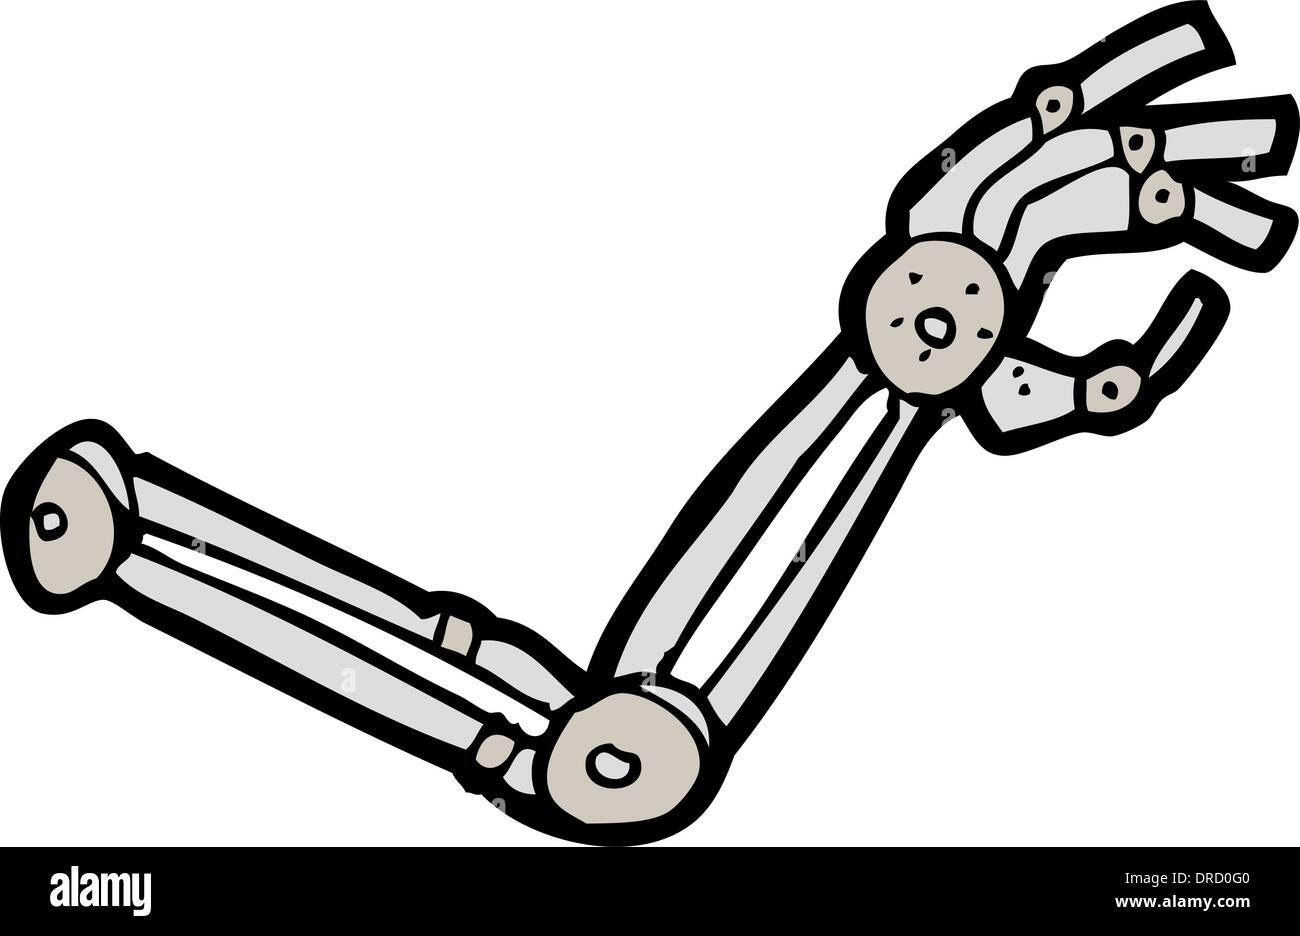 Bras de robot dessin animé Image Vectorielle Stock - Alamy